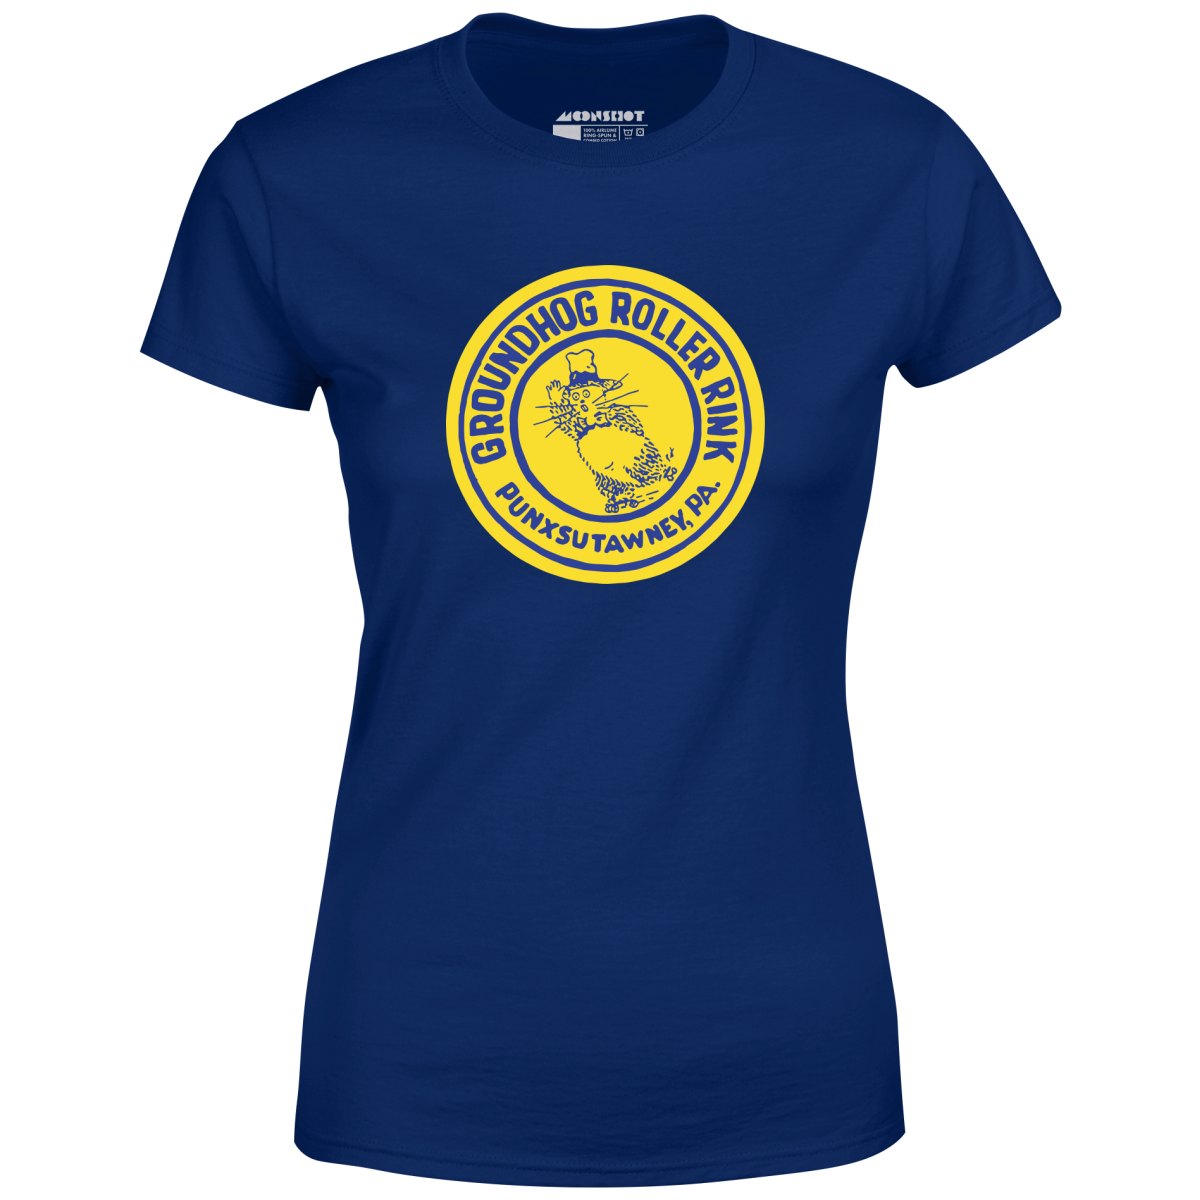 Groundhog Roller Rink - Punxsutawney, PA - Vintage Roller Rink - Women's T-Shirt